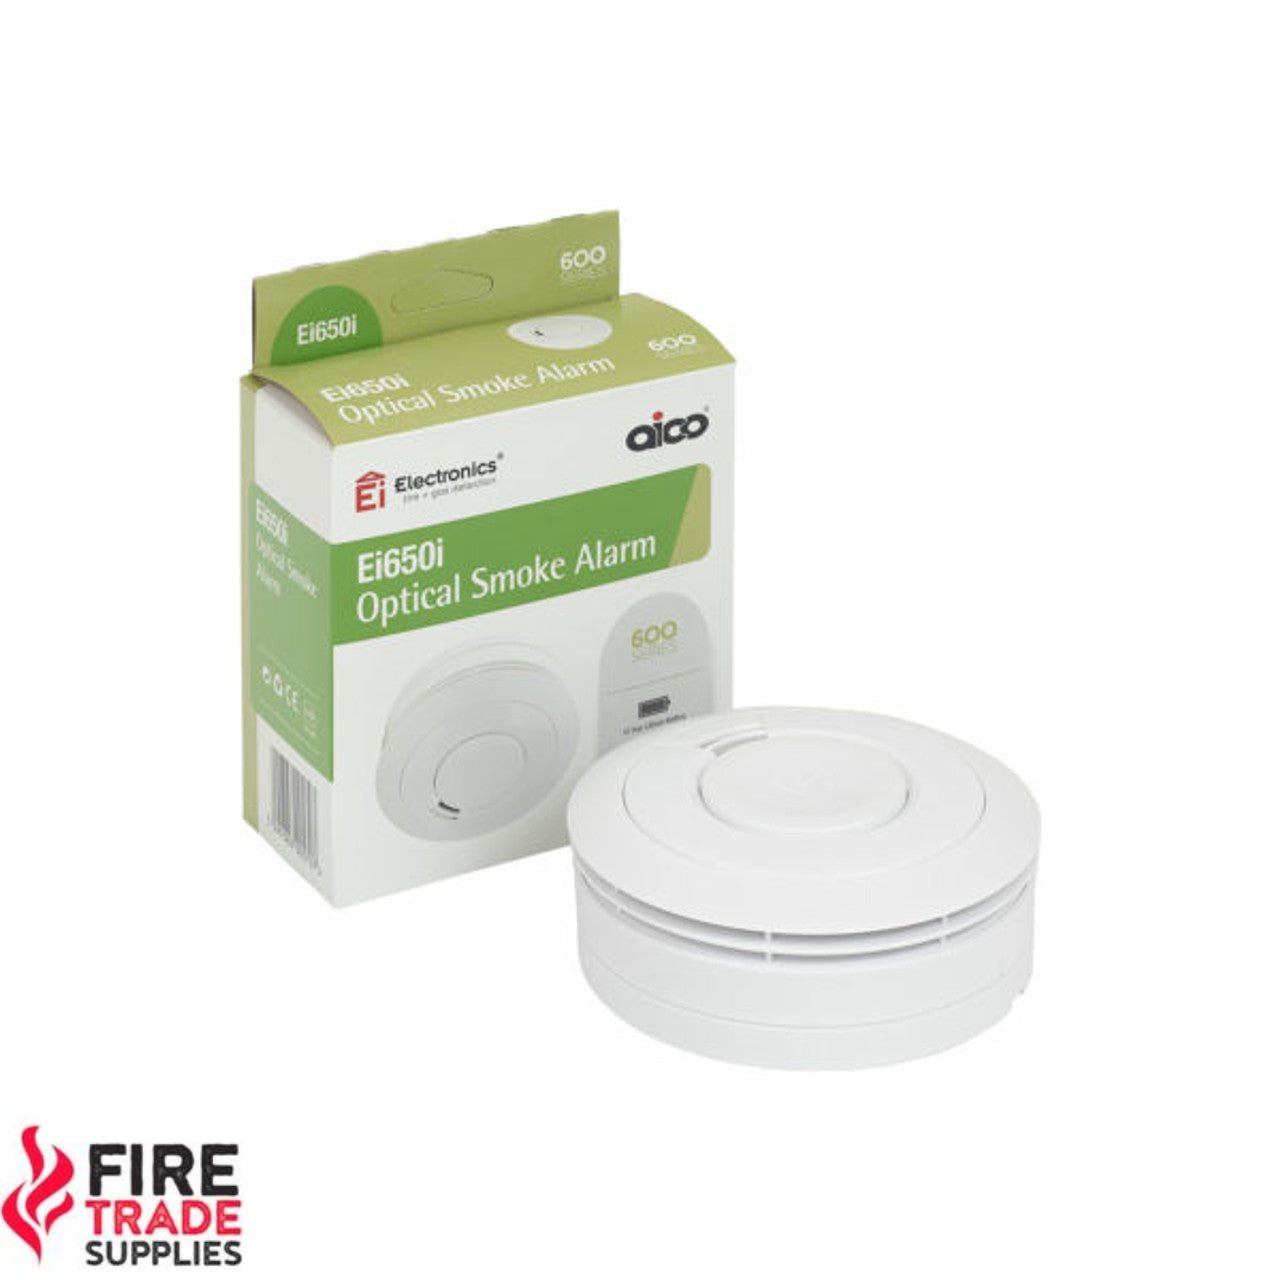 Battery Optical smoke Alarm Aico - Ei650i (600 series) - Fire Trade Supplies